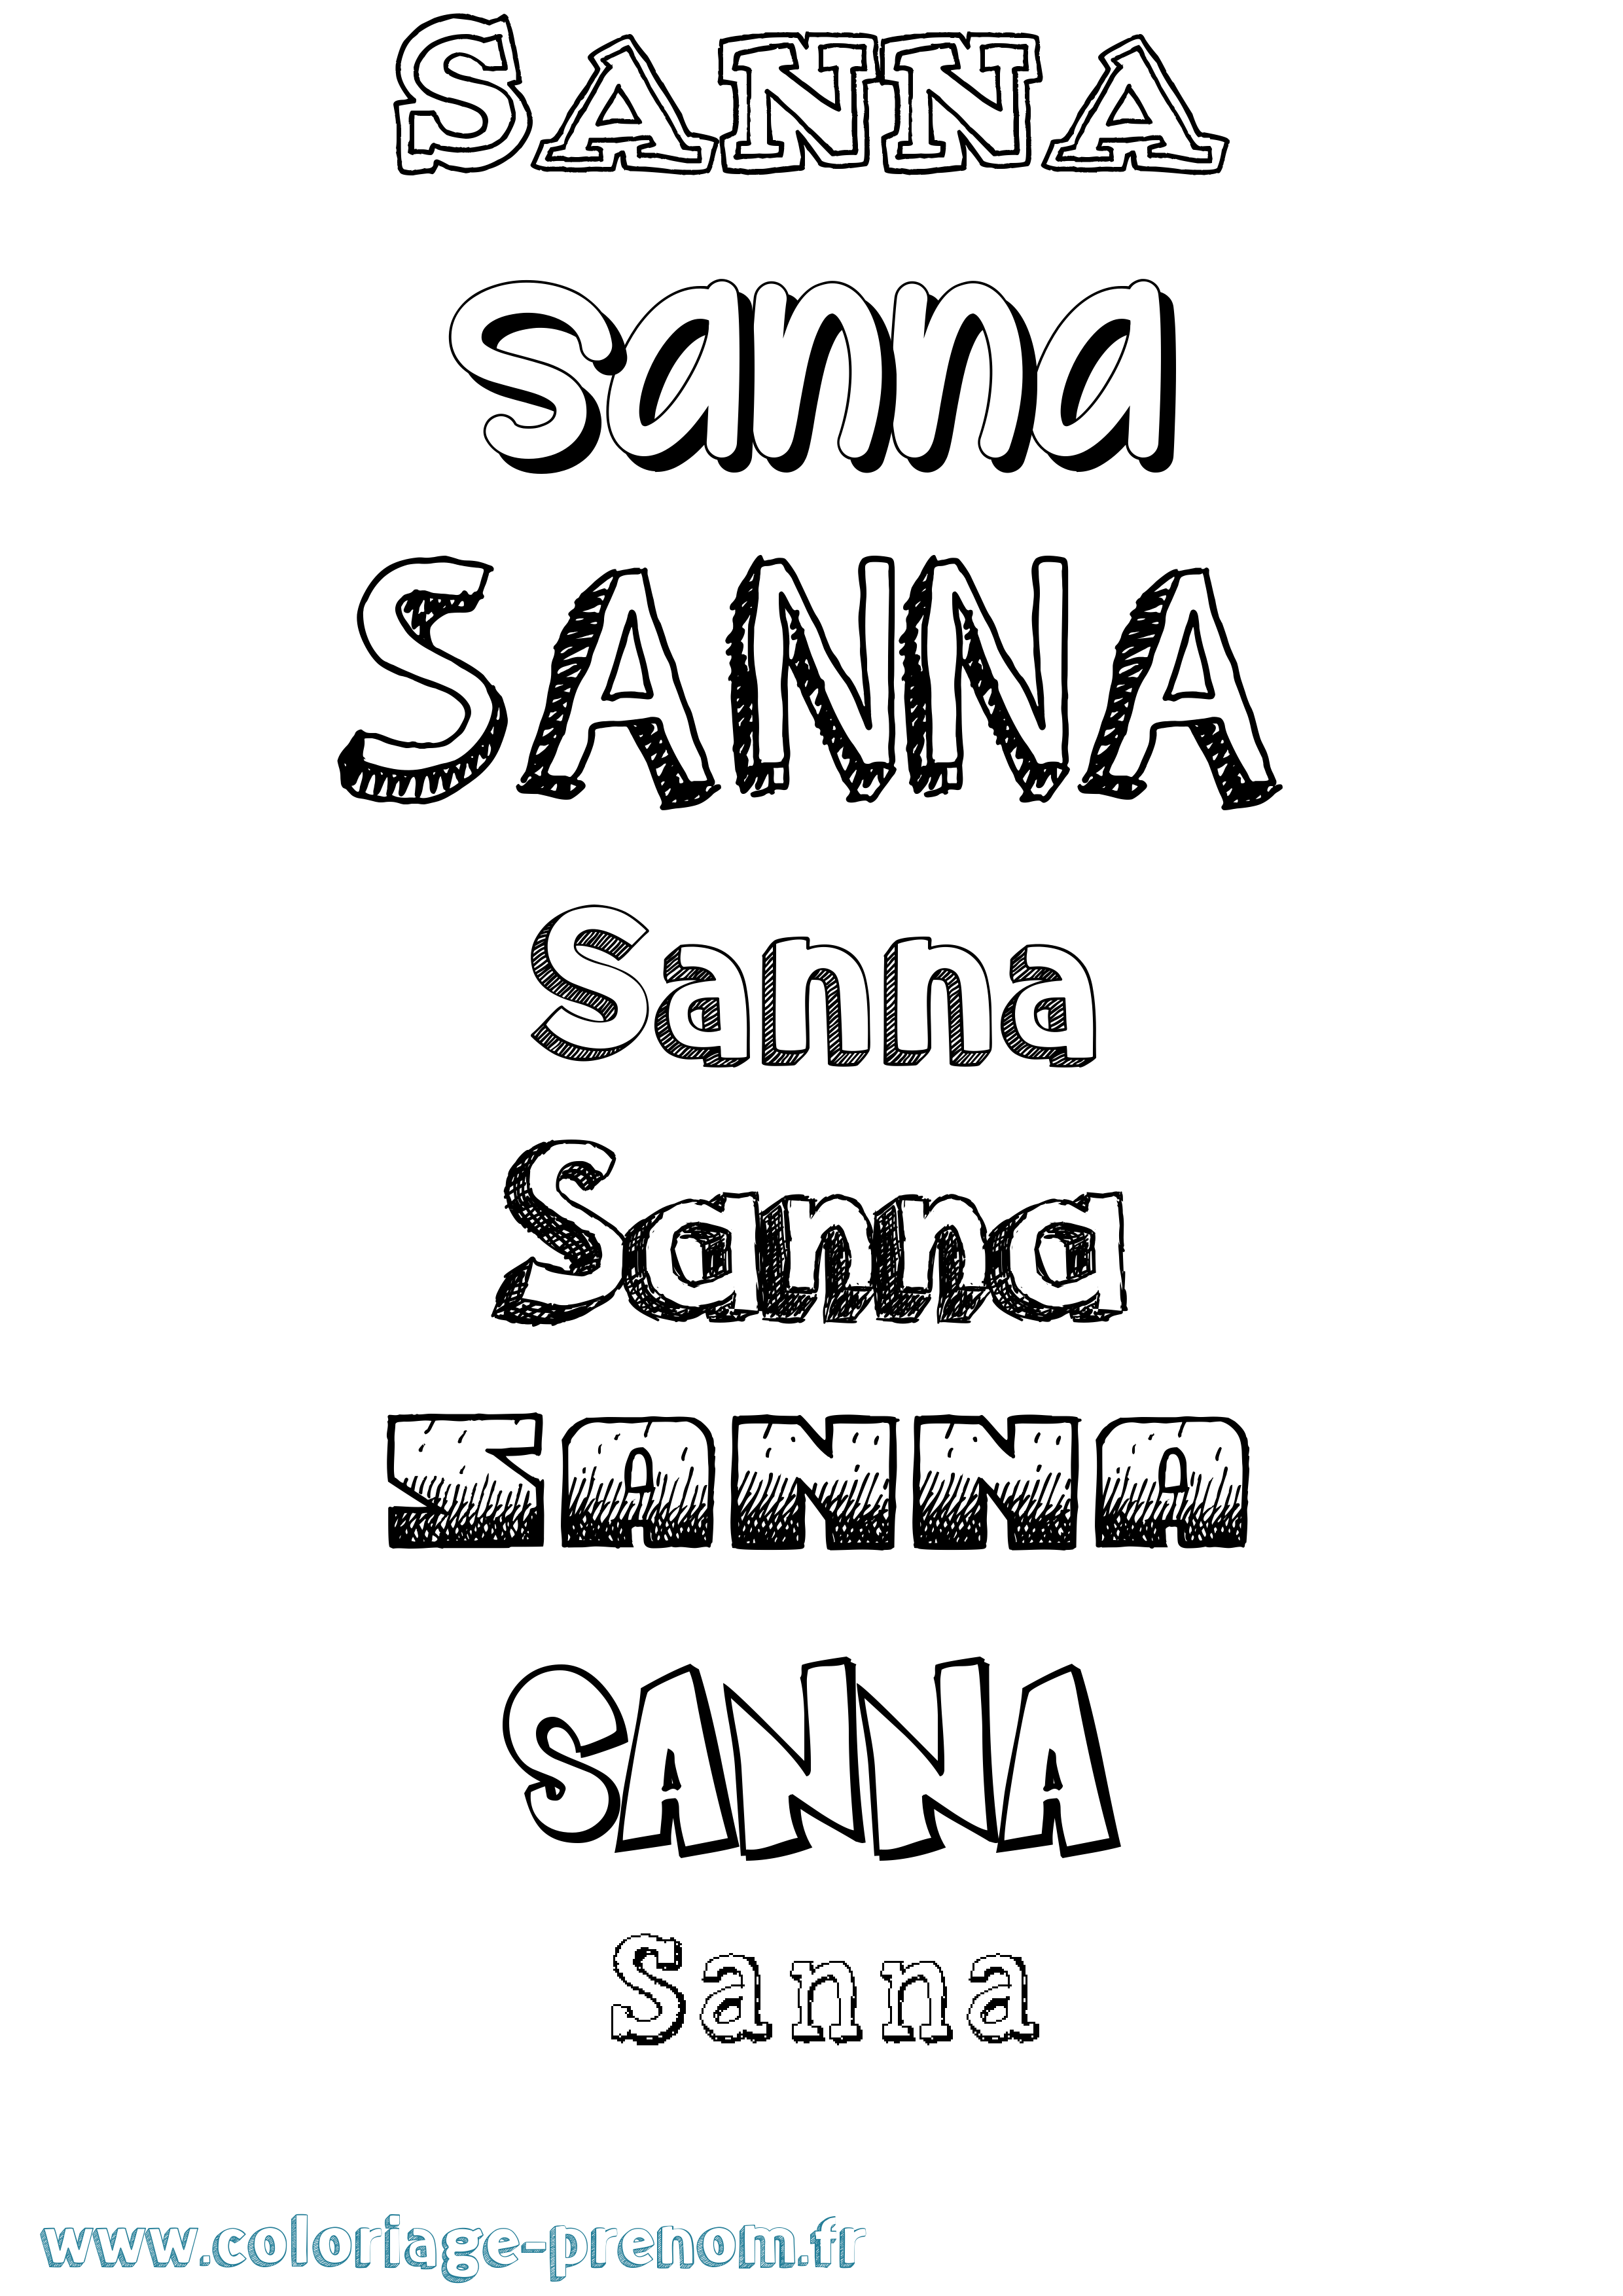 Coloriage prénom Sanna Dessiné